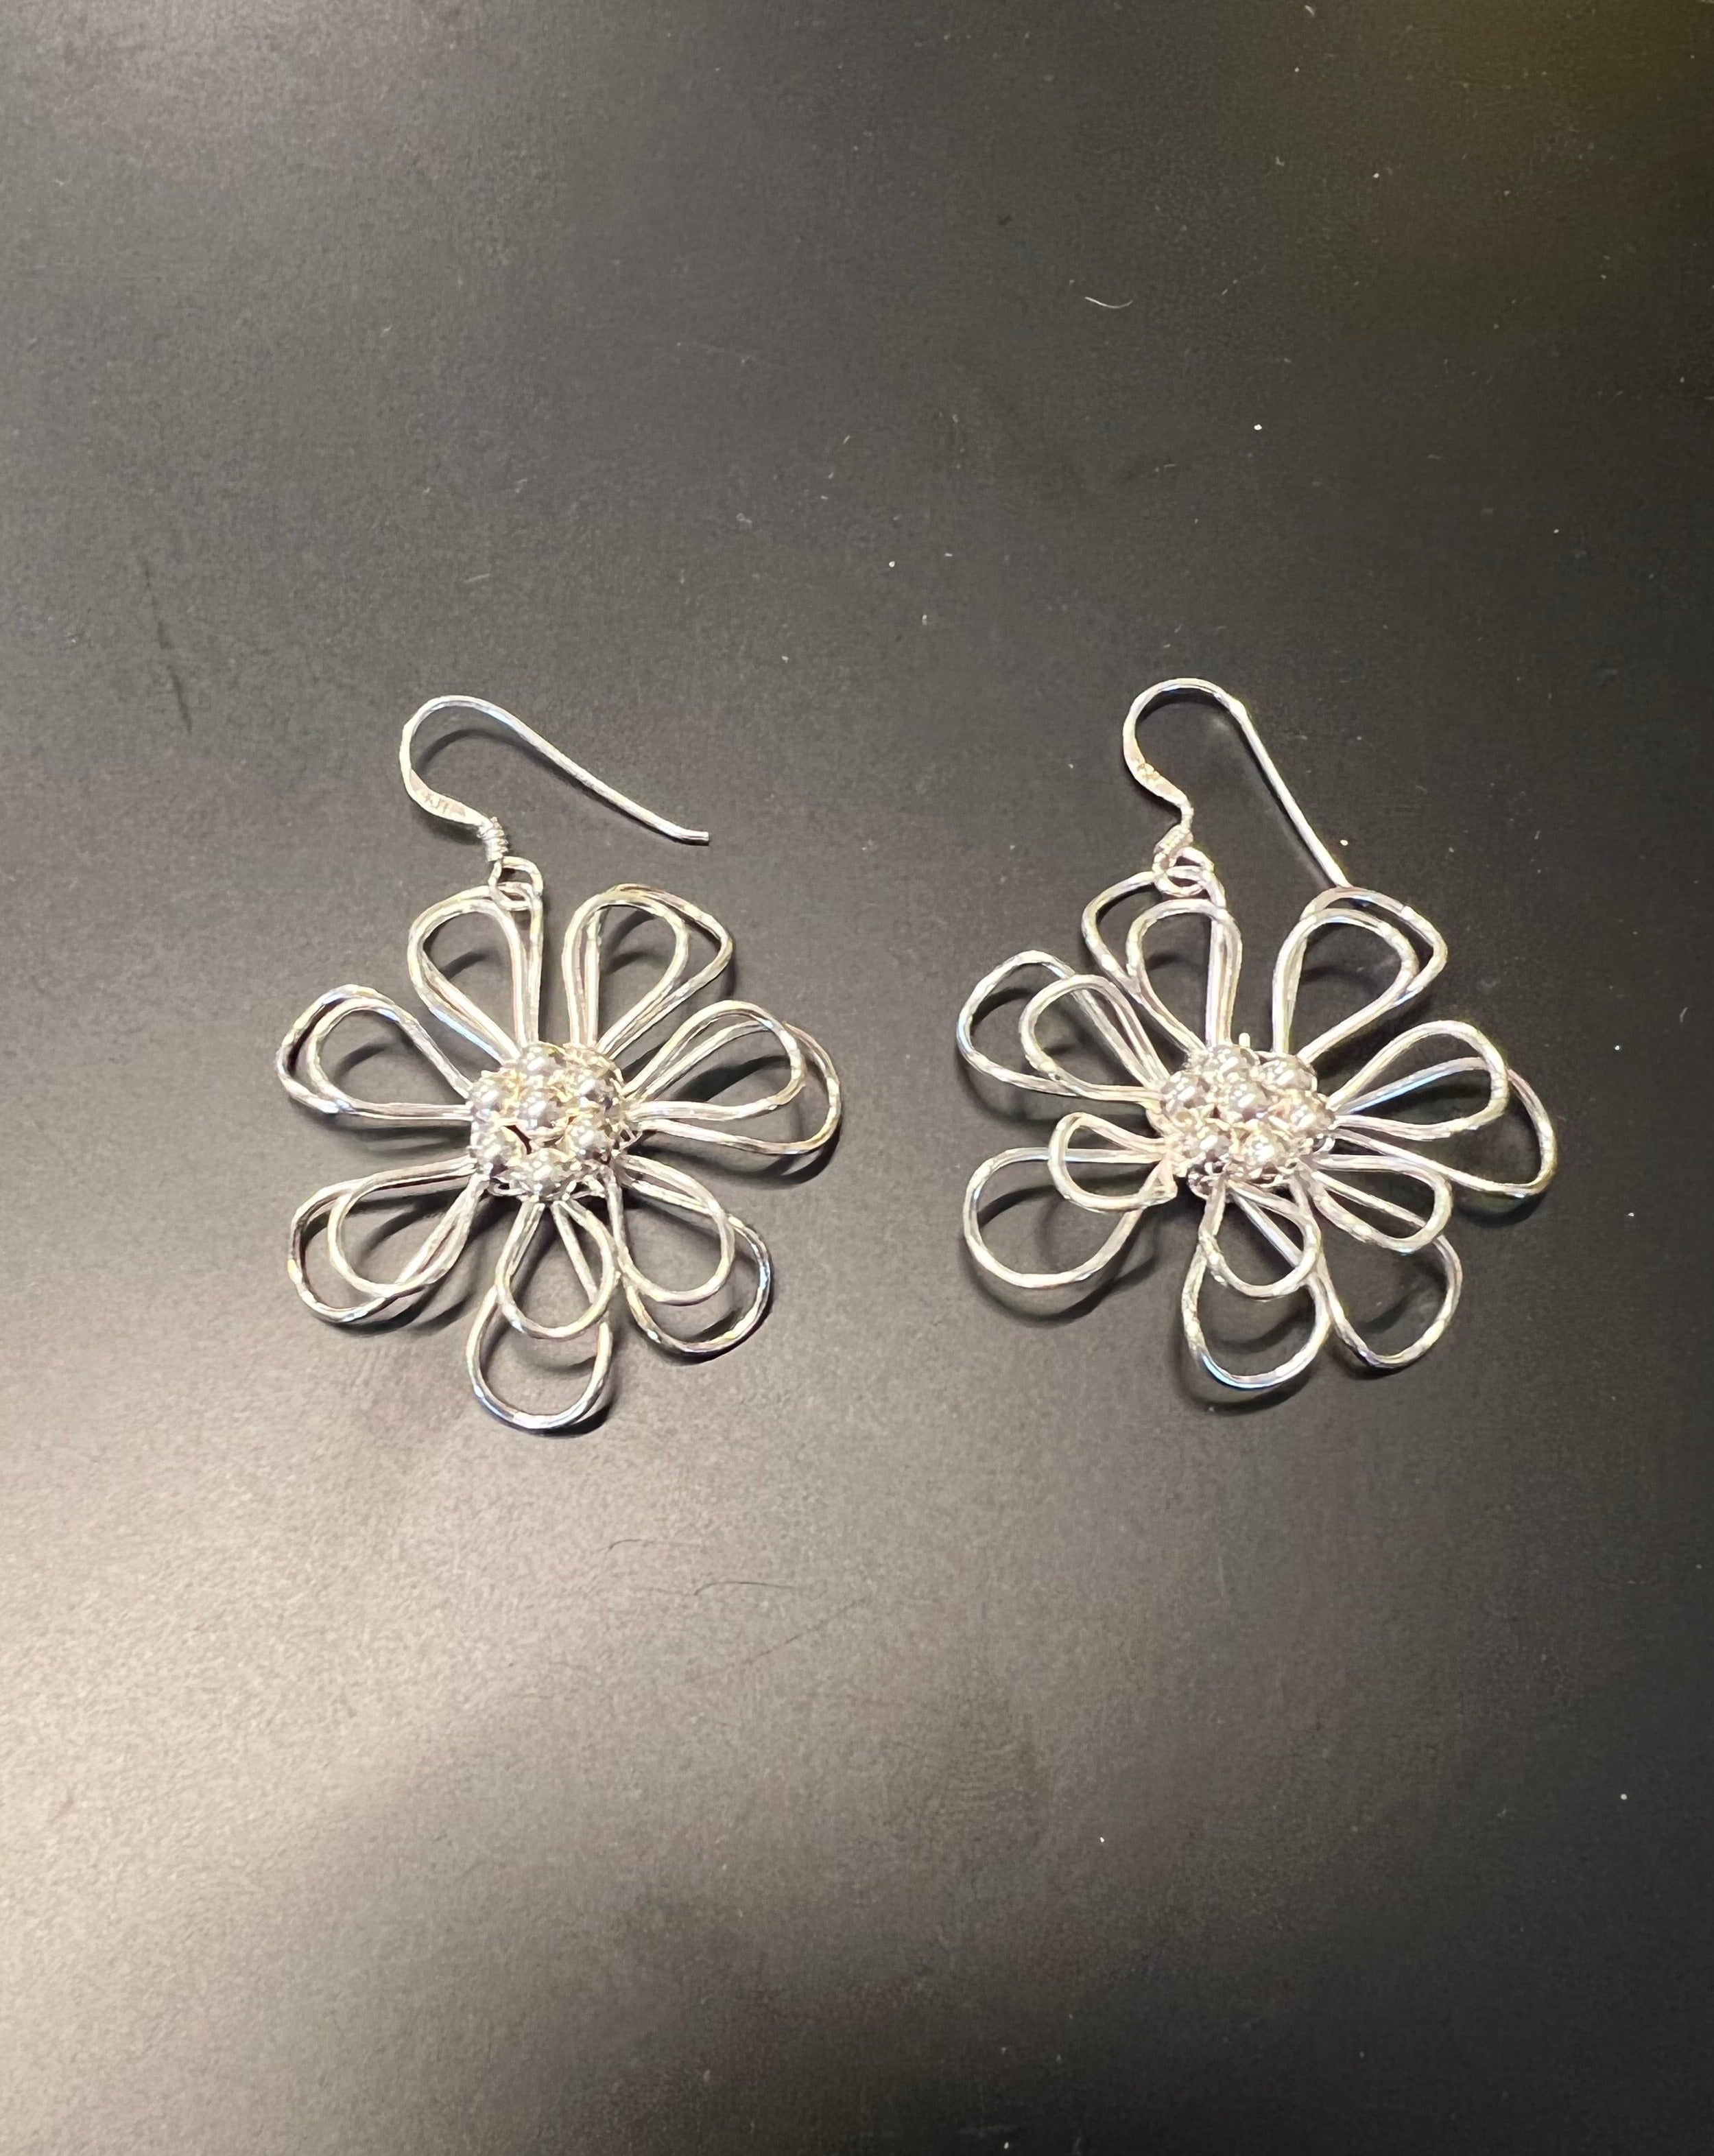 Devise Sculptured Flower Earrings - Sterling Silver